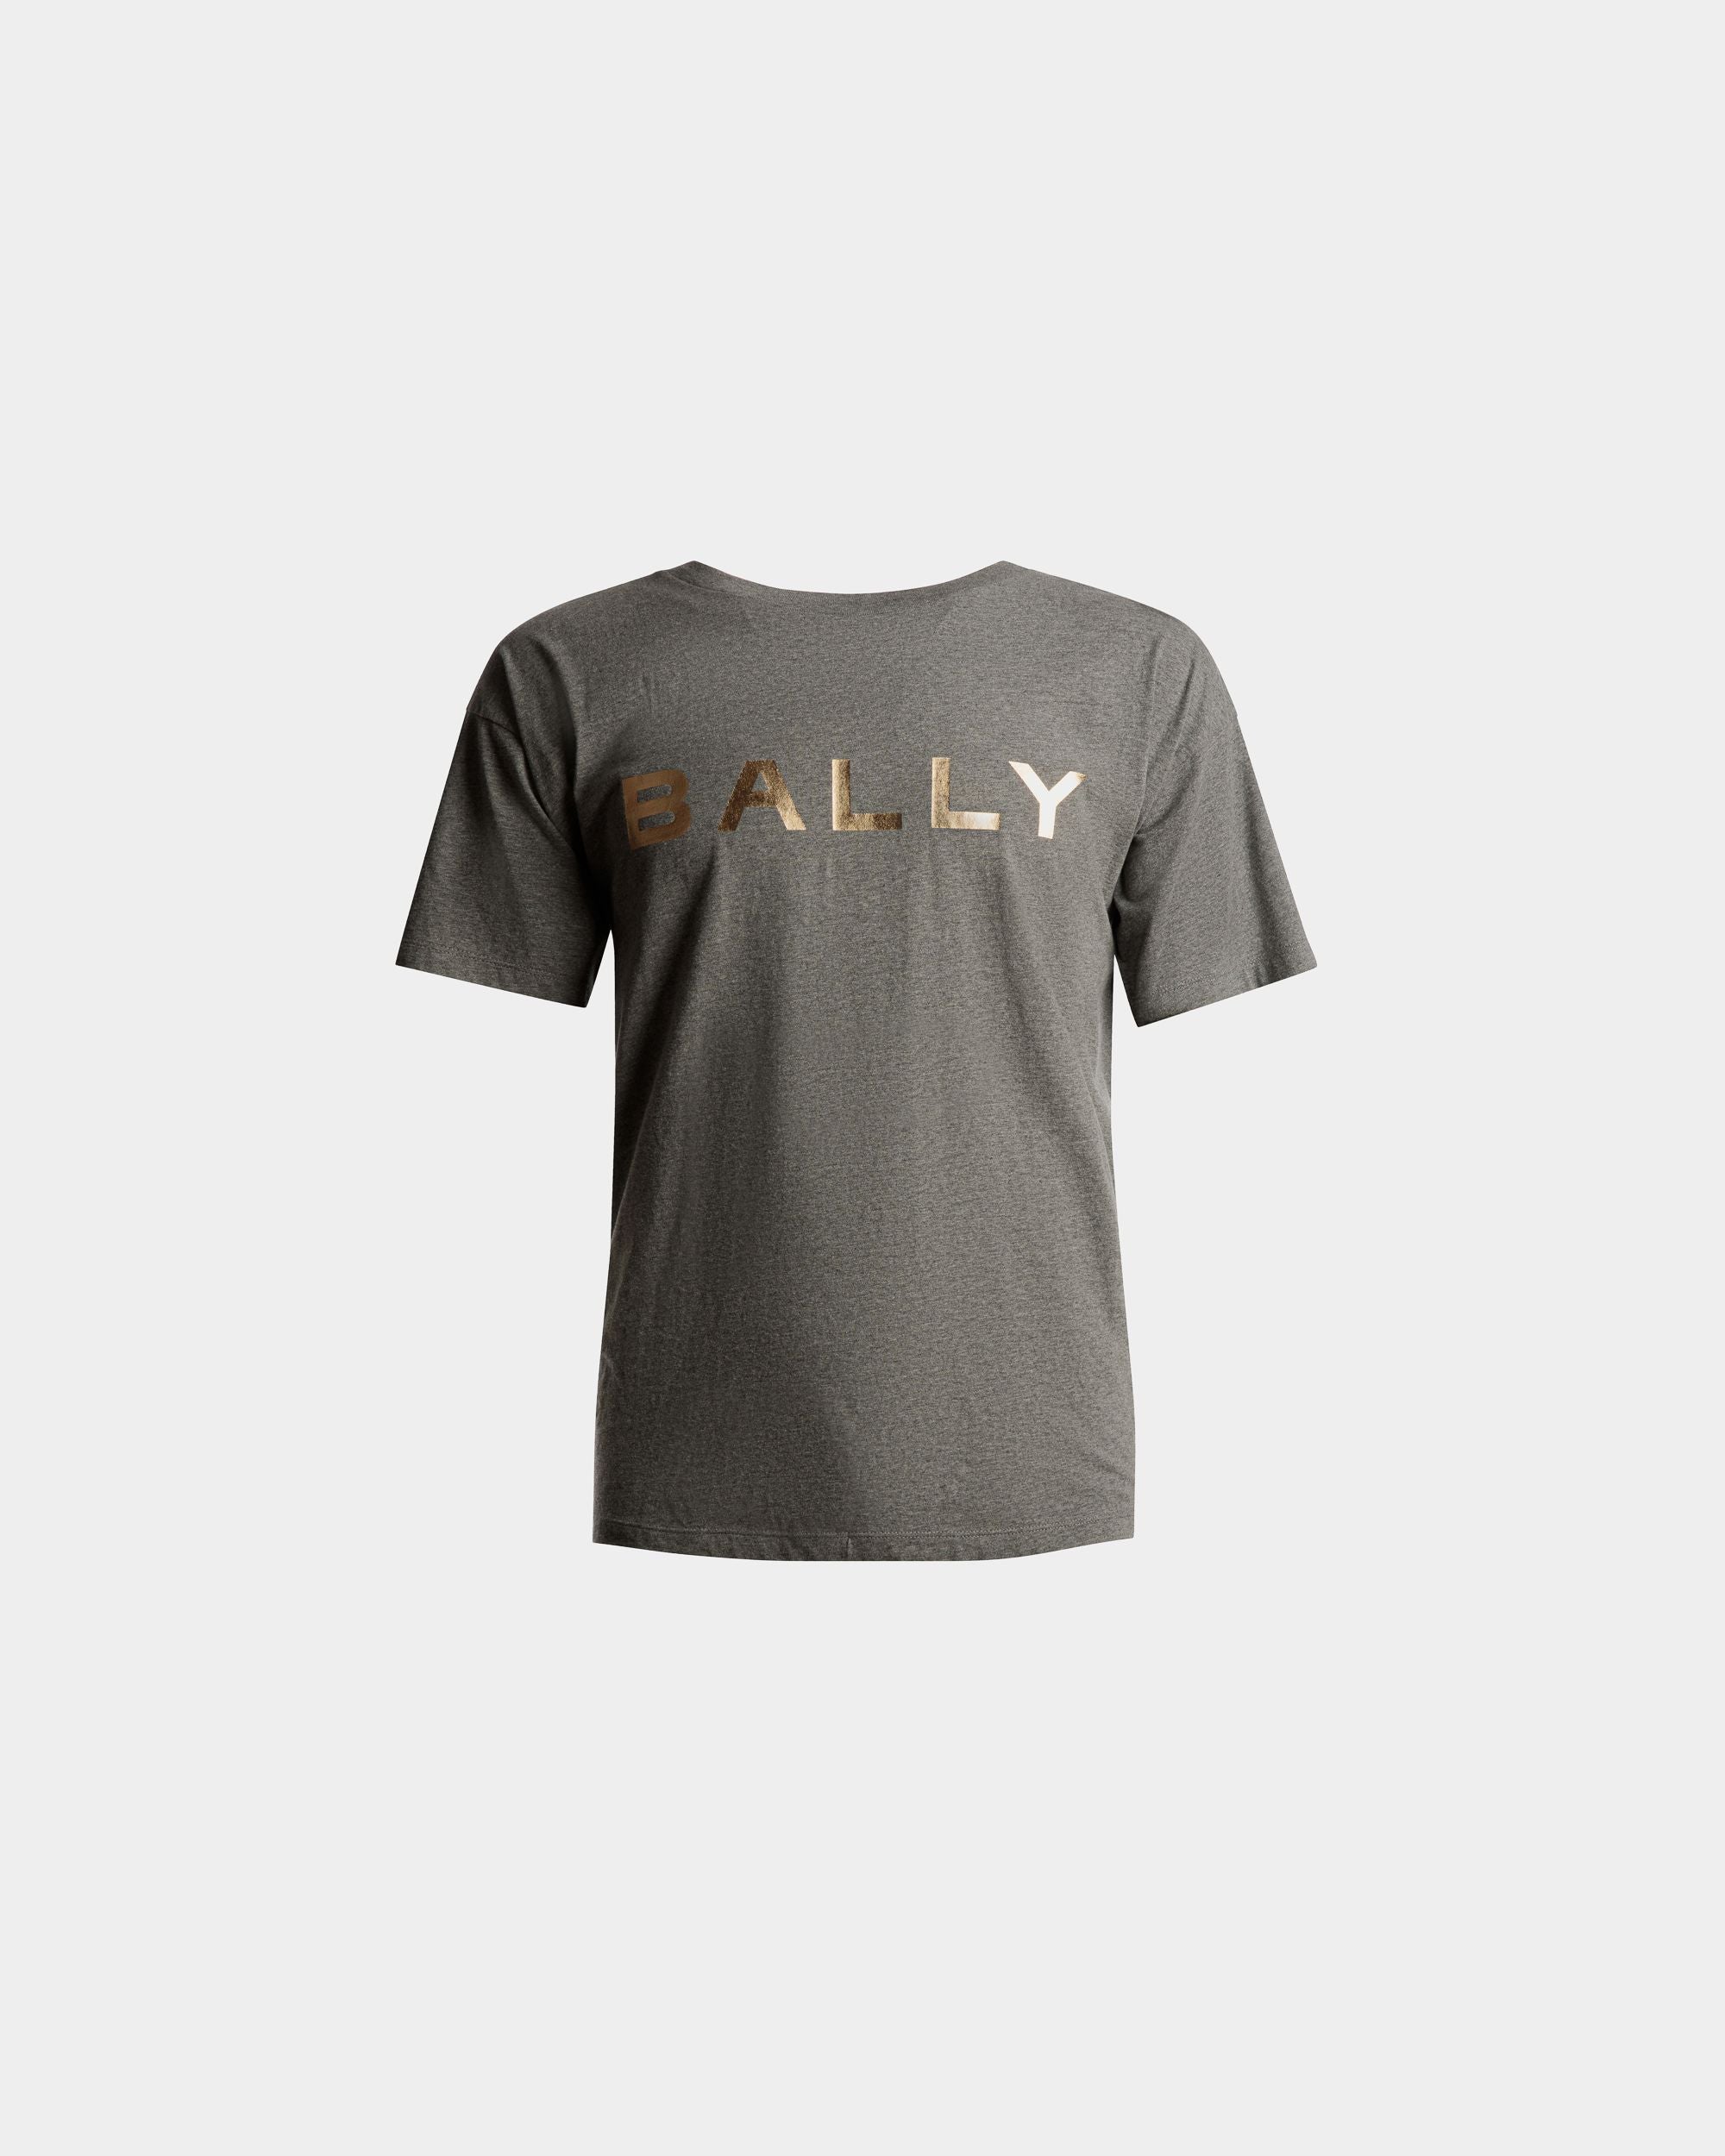 Logo T-Shirt | Men's T-Shirt | Grey Melange Cotton | Bally | Still Life Front